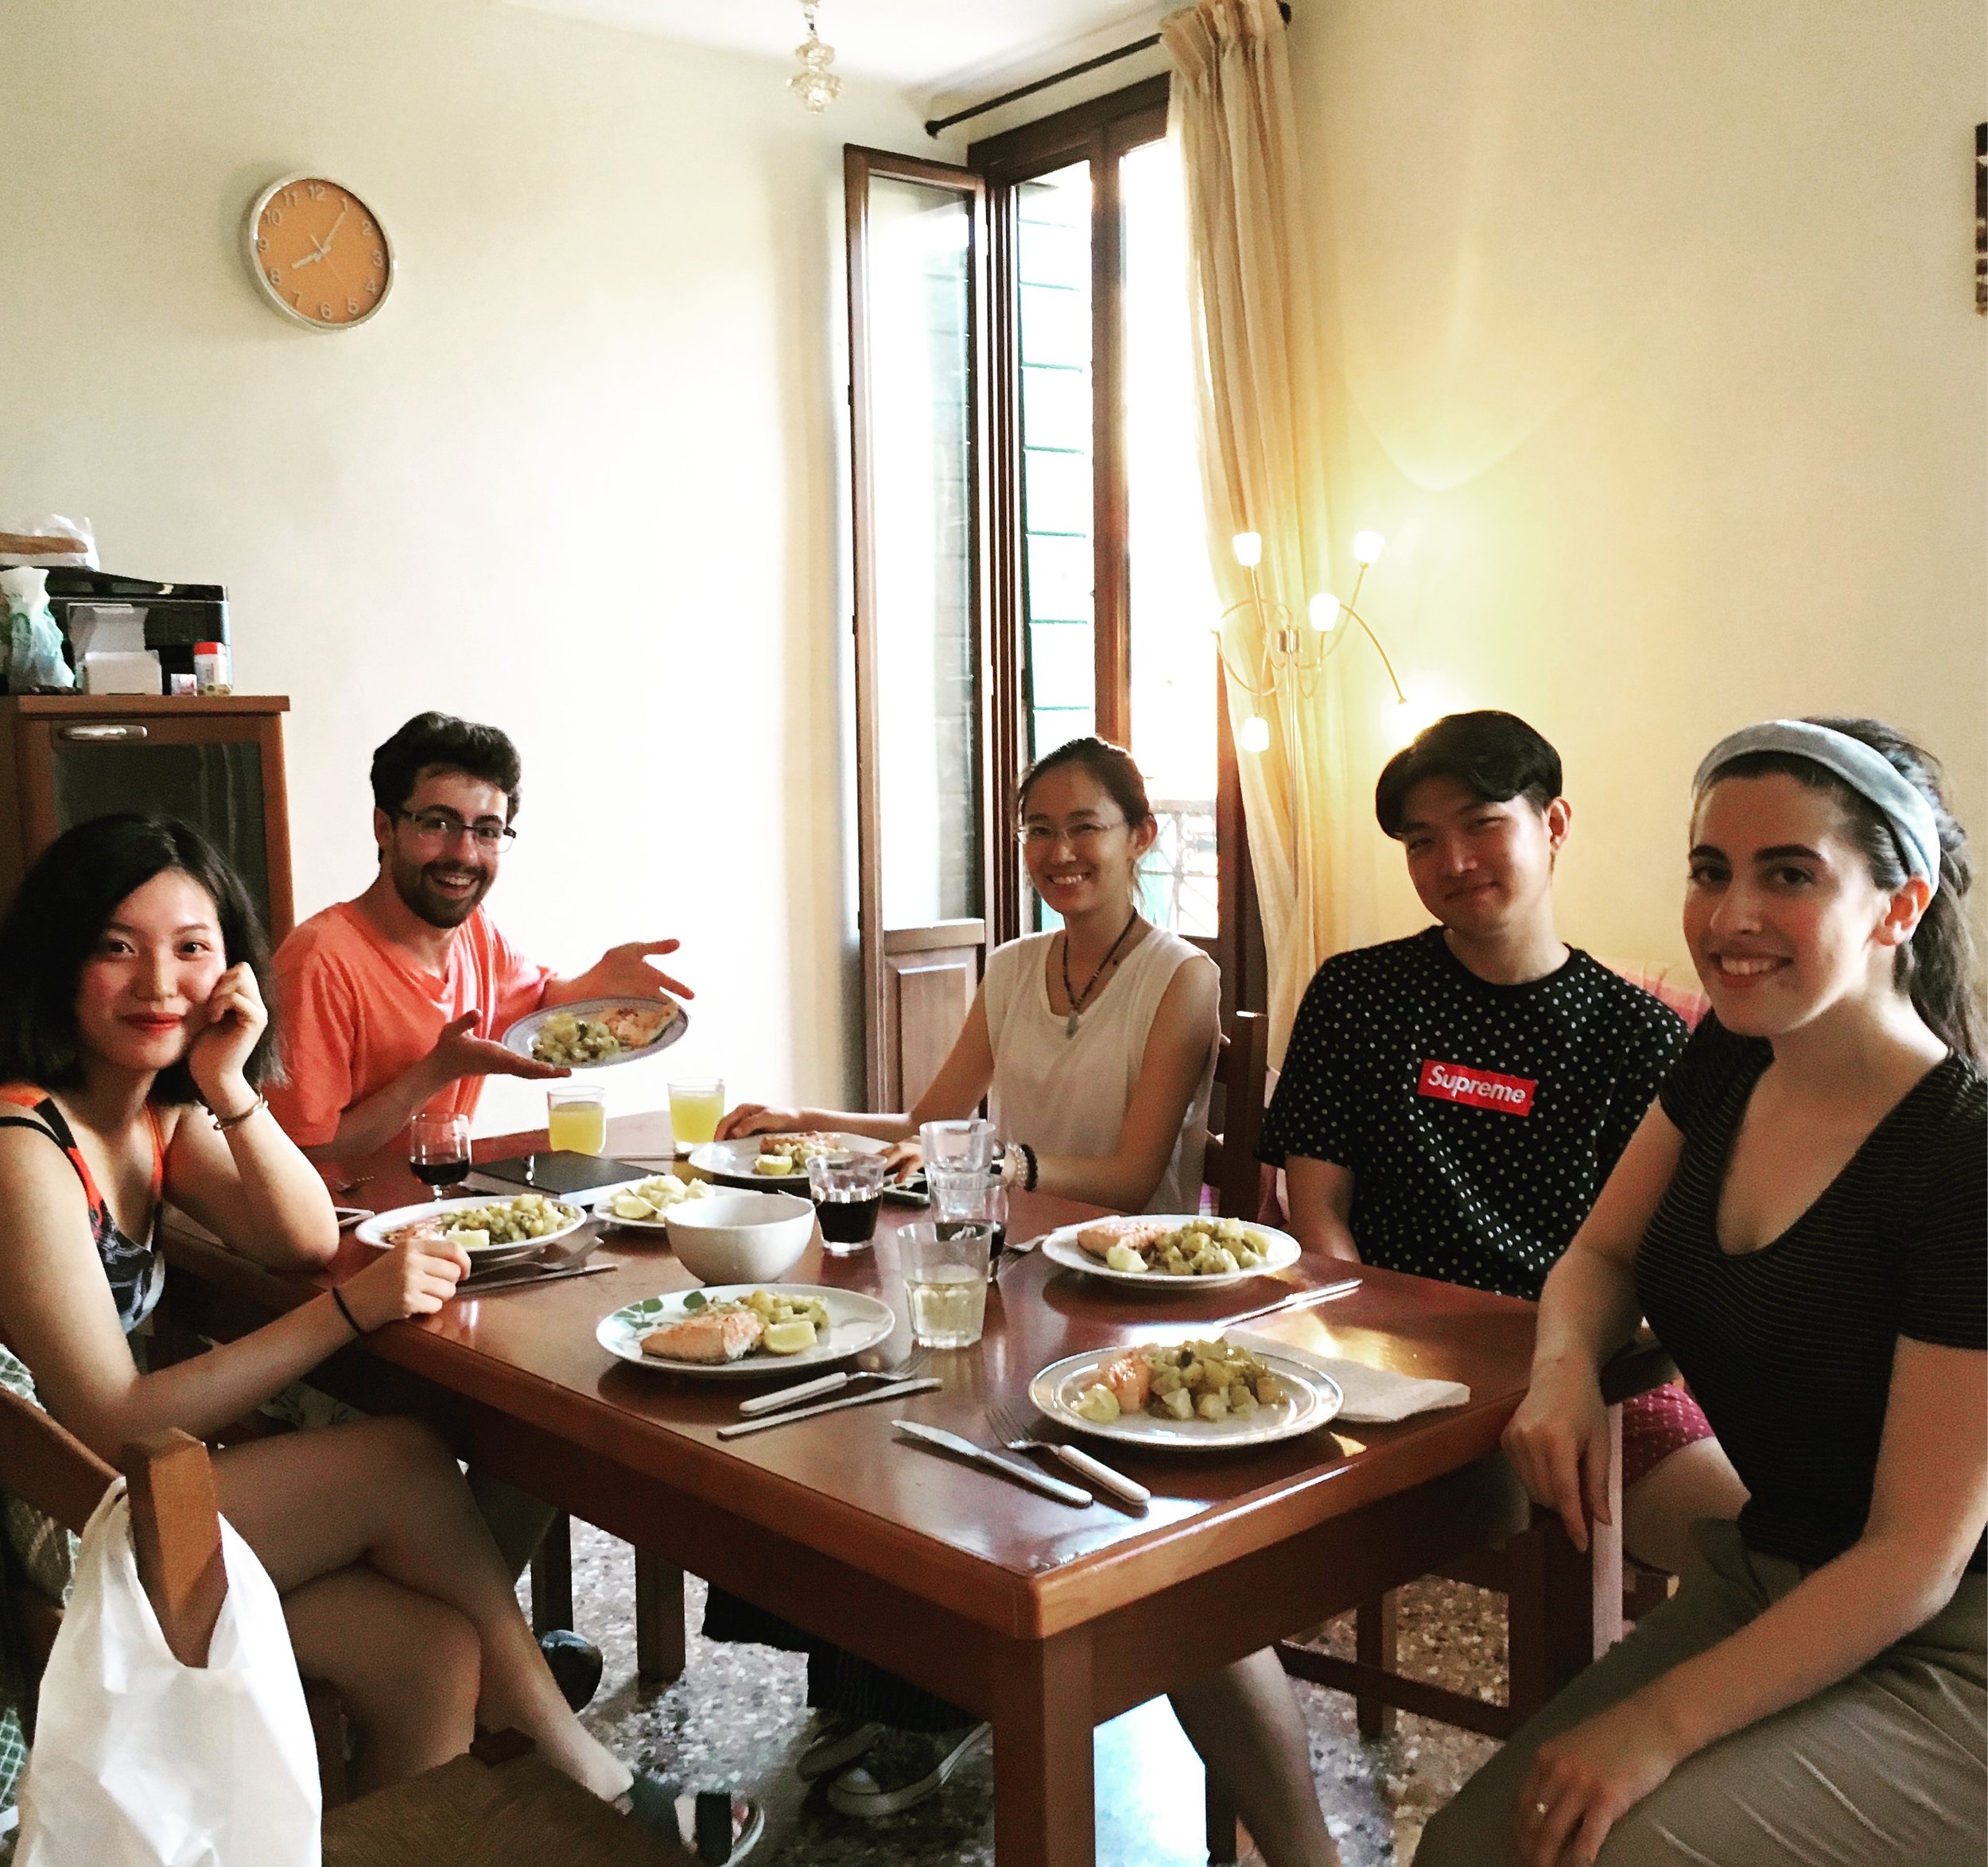 Safiye Senturk cooked dinner at the Via Garibaldi apartment for students Valen Zhang, Nick LaPole, Peixuan Li, and Chung Jae Lee